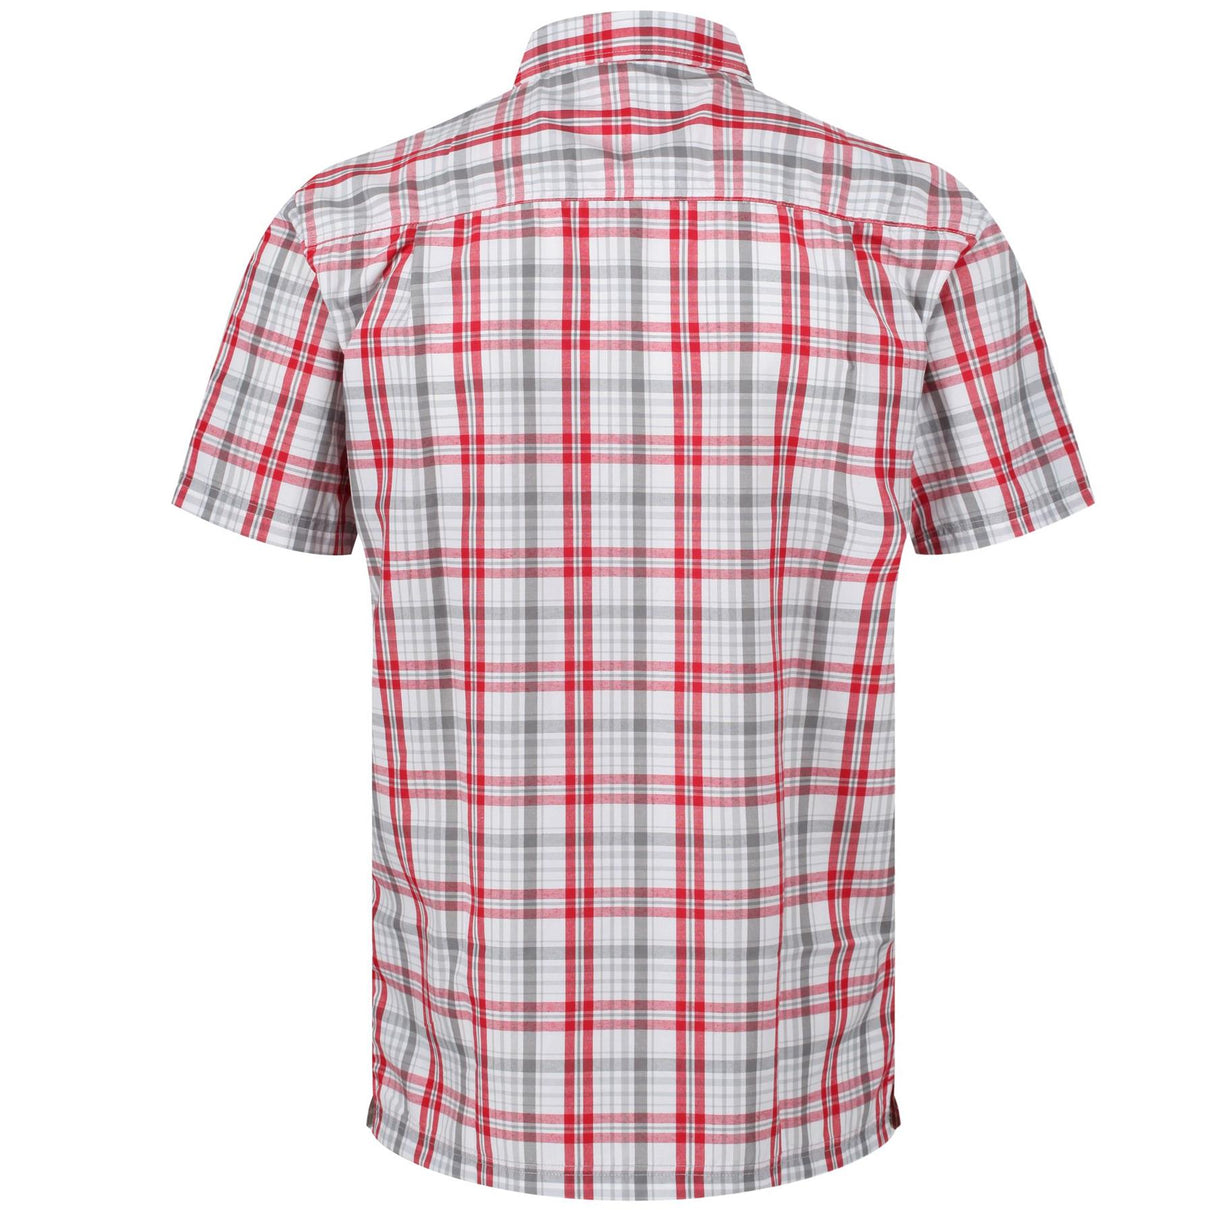 Regatta Mens Mindano V Check Short Sleeve Shirt